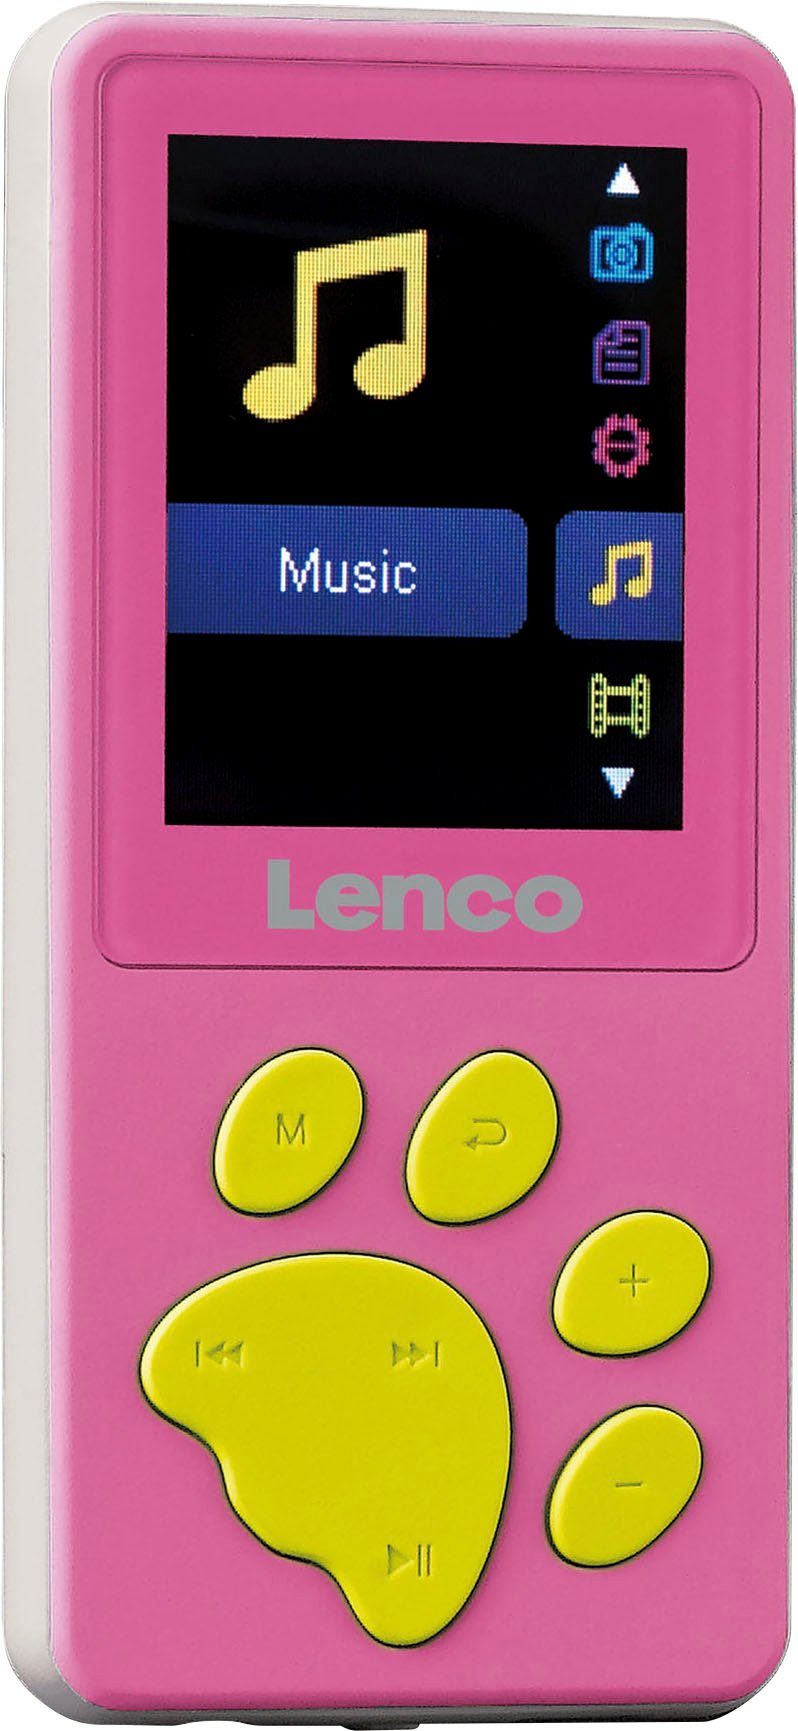 Xemio-560 Pink GB) MP3-Player MP4-Player Lenco (128